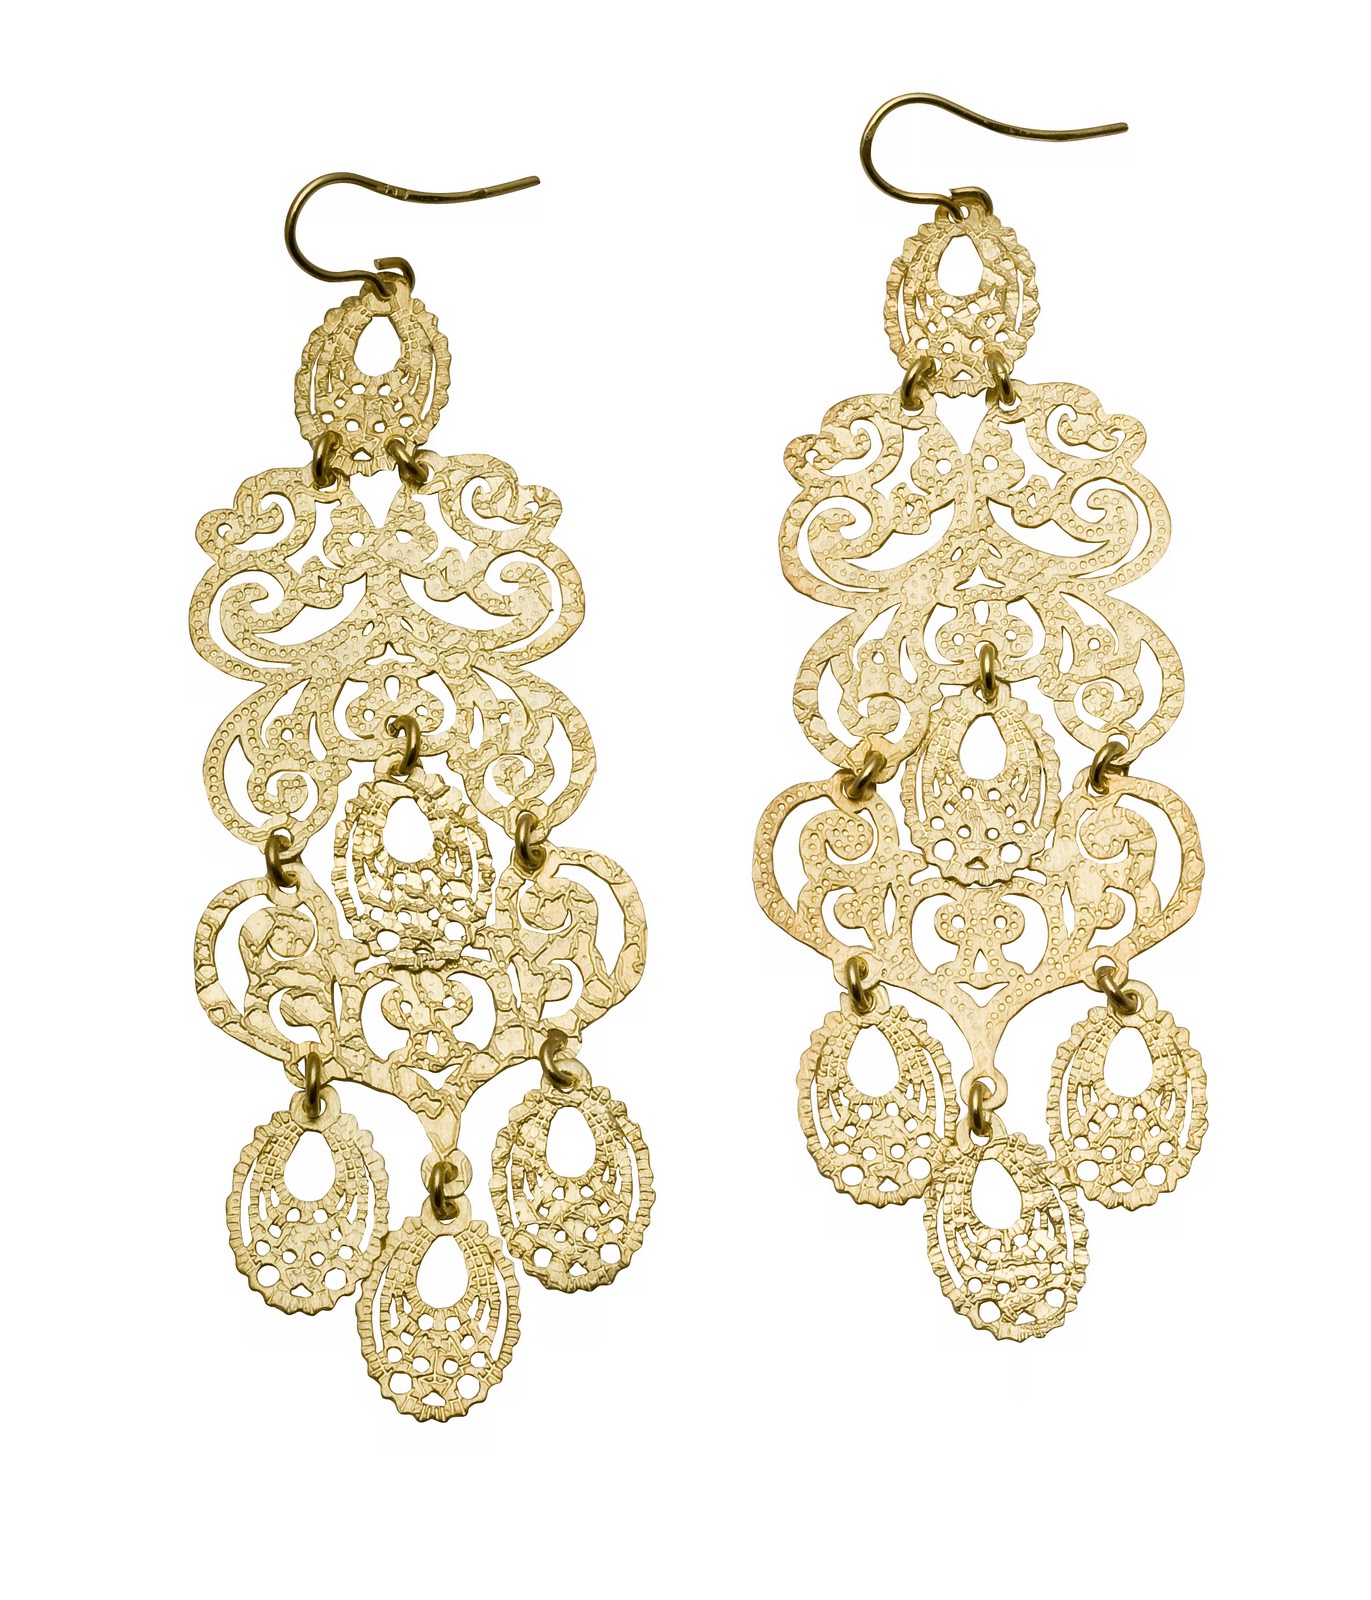 Azendi Jewellery – Worth a look and wear